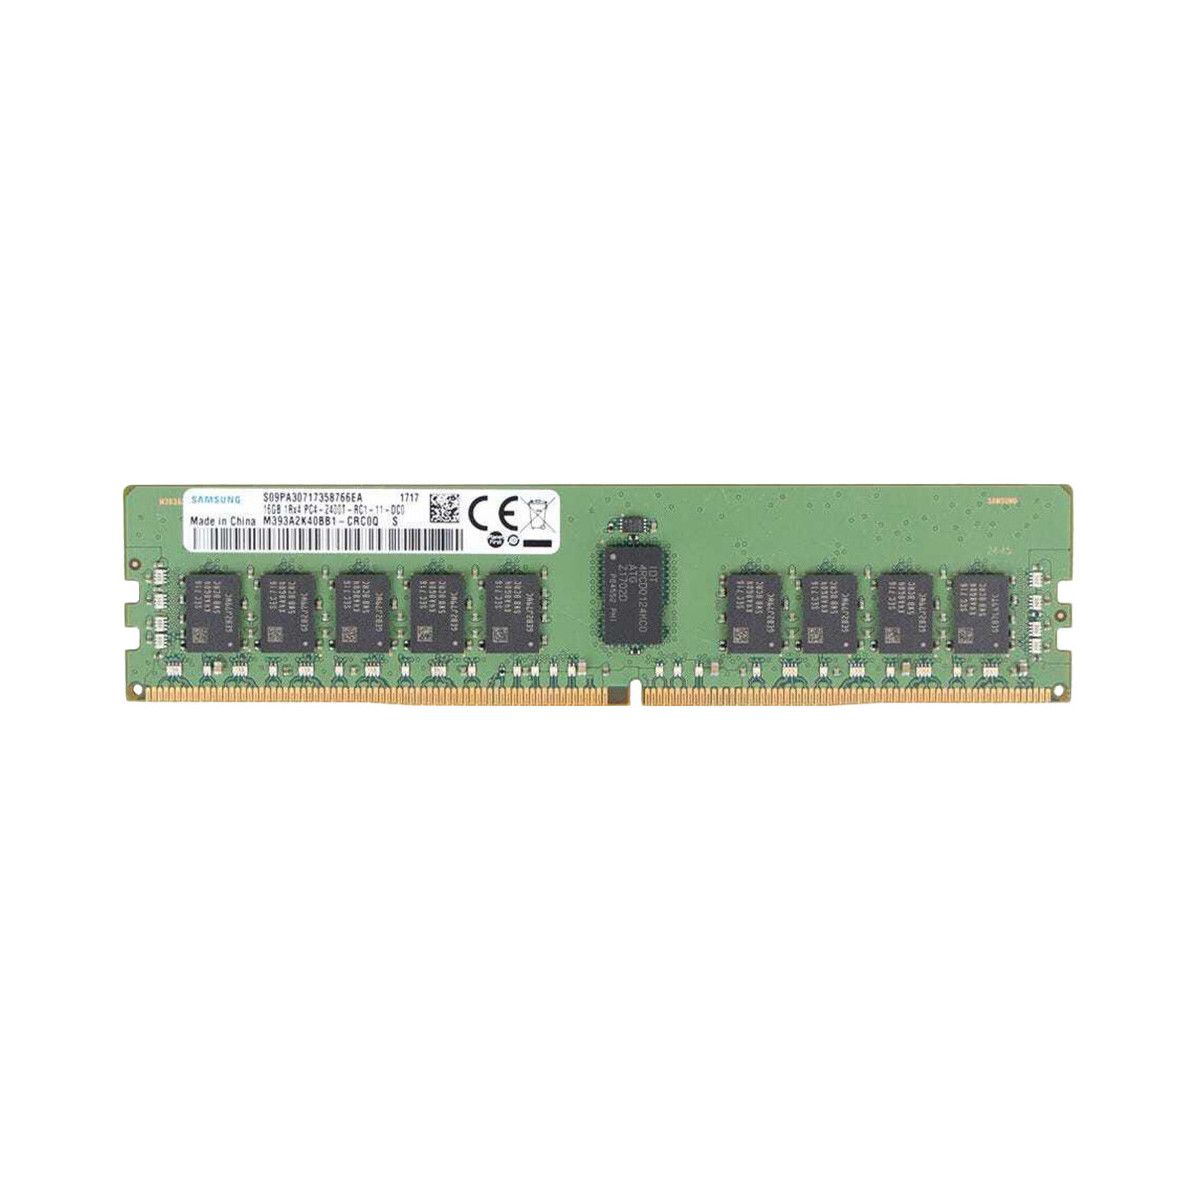 A8711887-MS - Memstar 1x 16GB DDR4-2400 RDIMM PC4-19200T-R - Mem-Star Compatibile OEM Memoria 1 - Memstar 